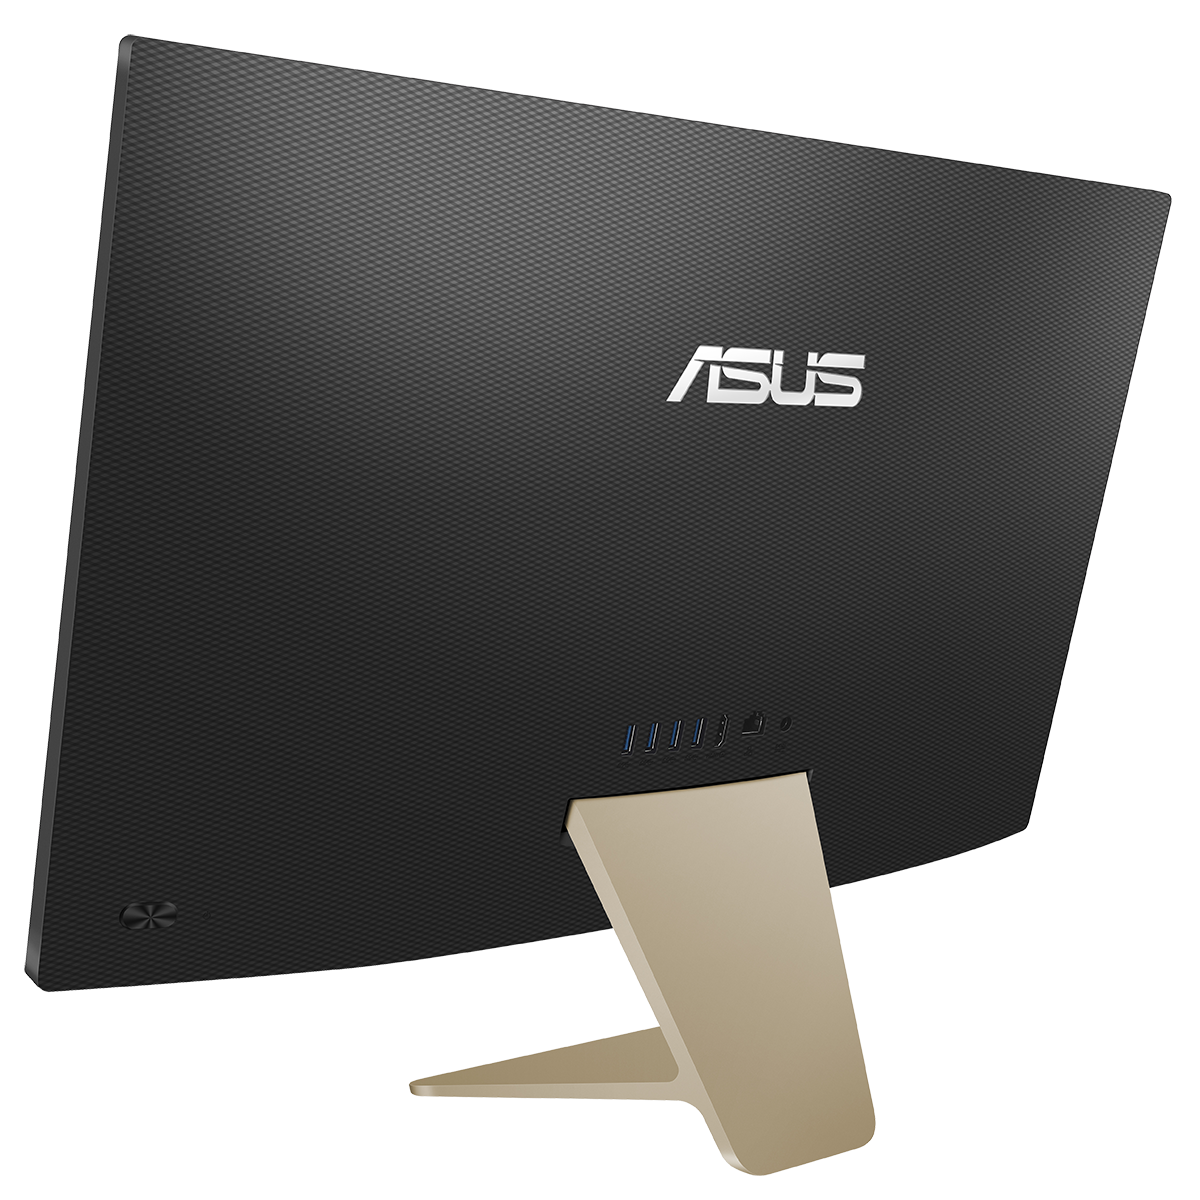 AIO V241 back 09 | All in one | ASUS ส่งโน๊ตบุ๊คสองหน้าจอ ZenBook Duo 14 ตัวล่าสุดจากงาน CES 2021 พร้อมวางจำหน่ายในไทย